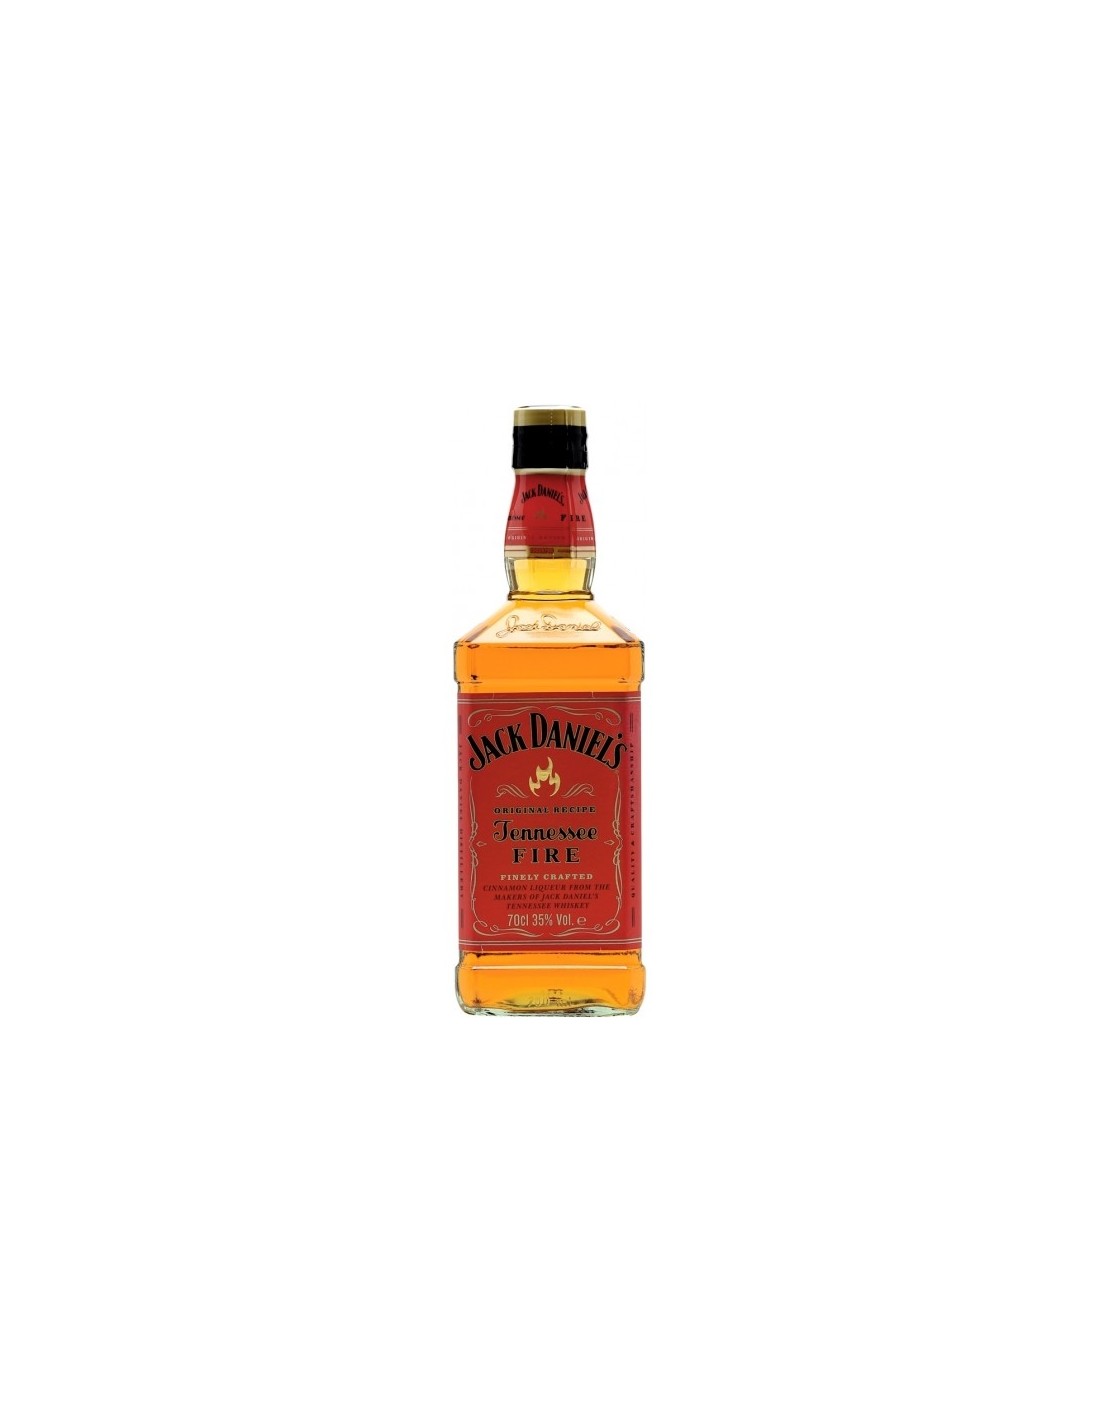 Whisky Jack Daniel’s Fire 0.7L, 35% alc., America alcooldiscount.ro